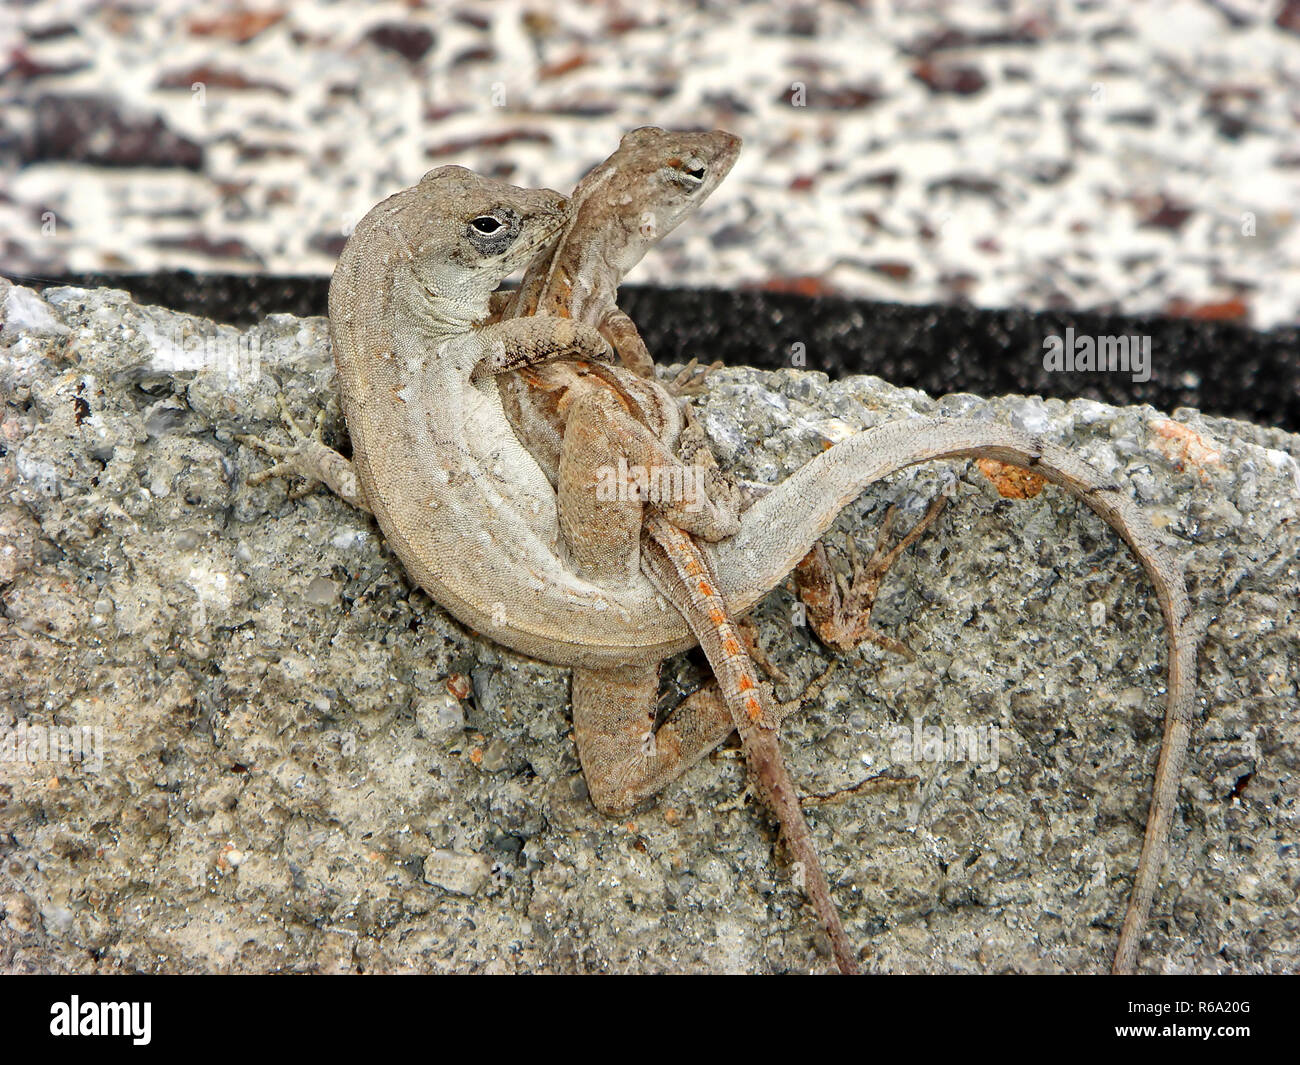 Mating Lizards Stock Photo